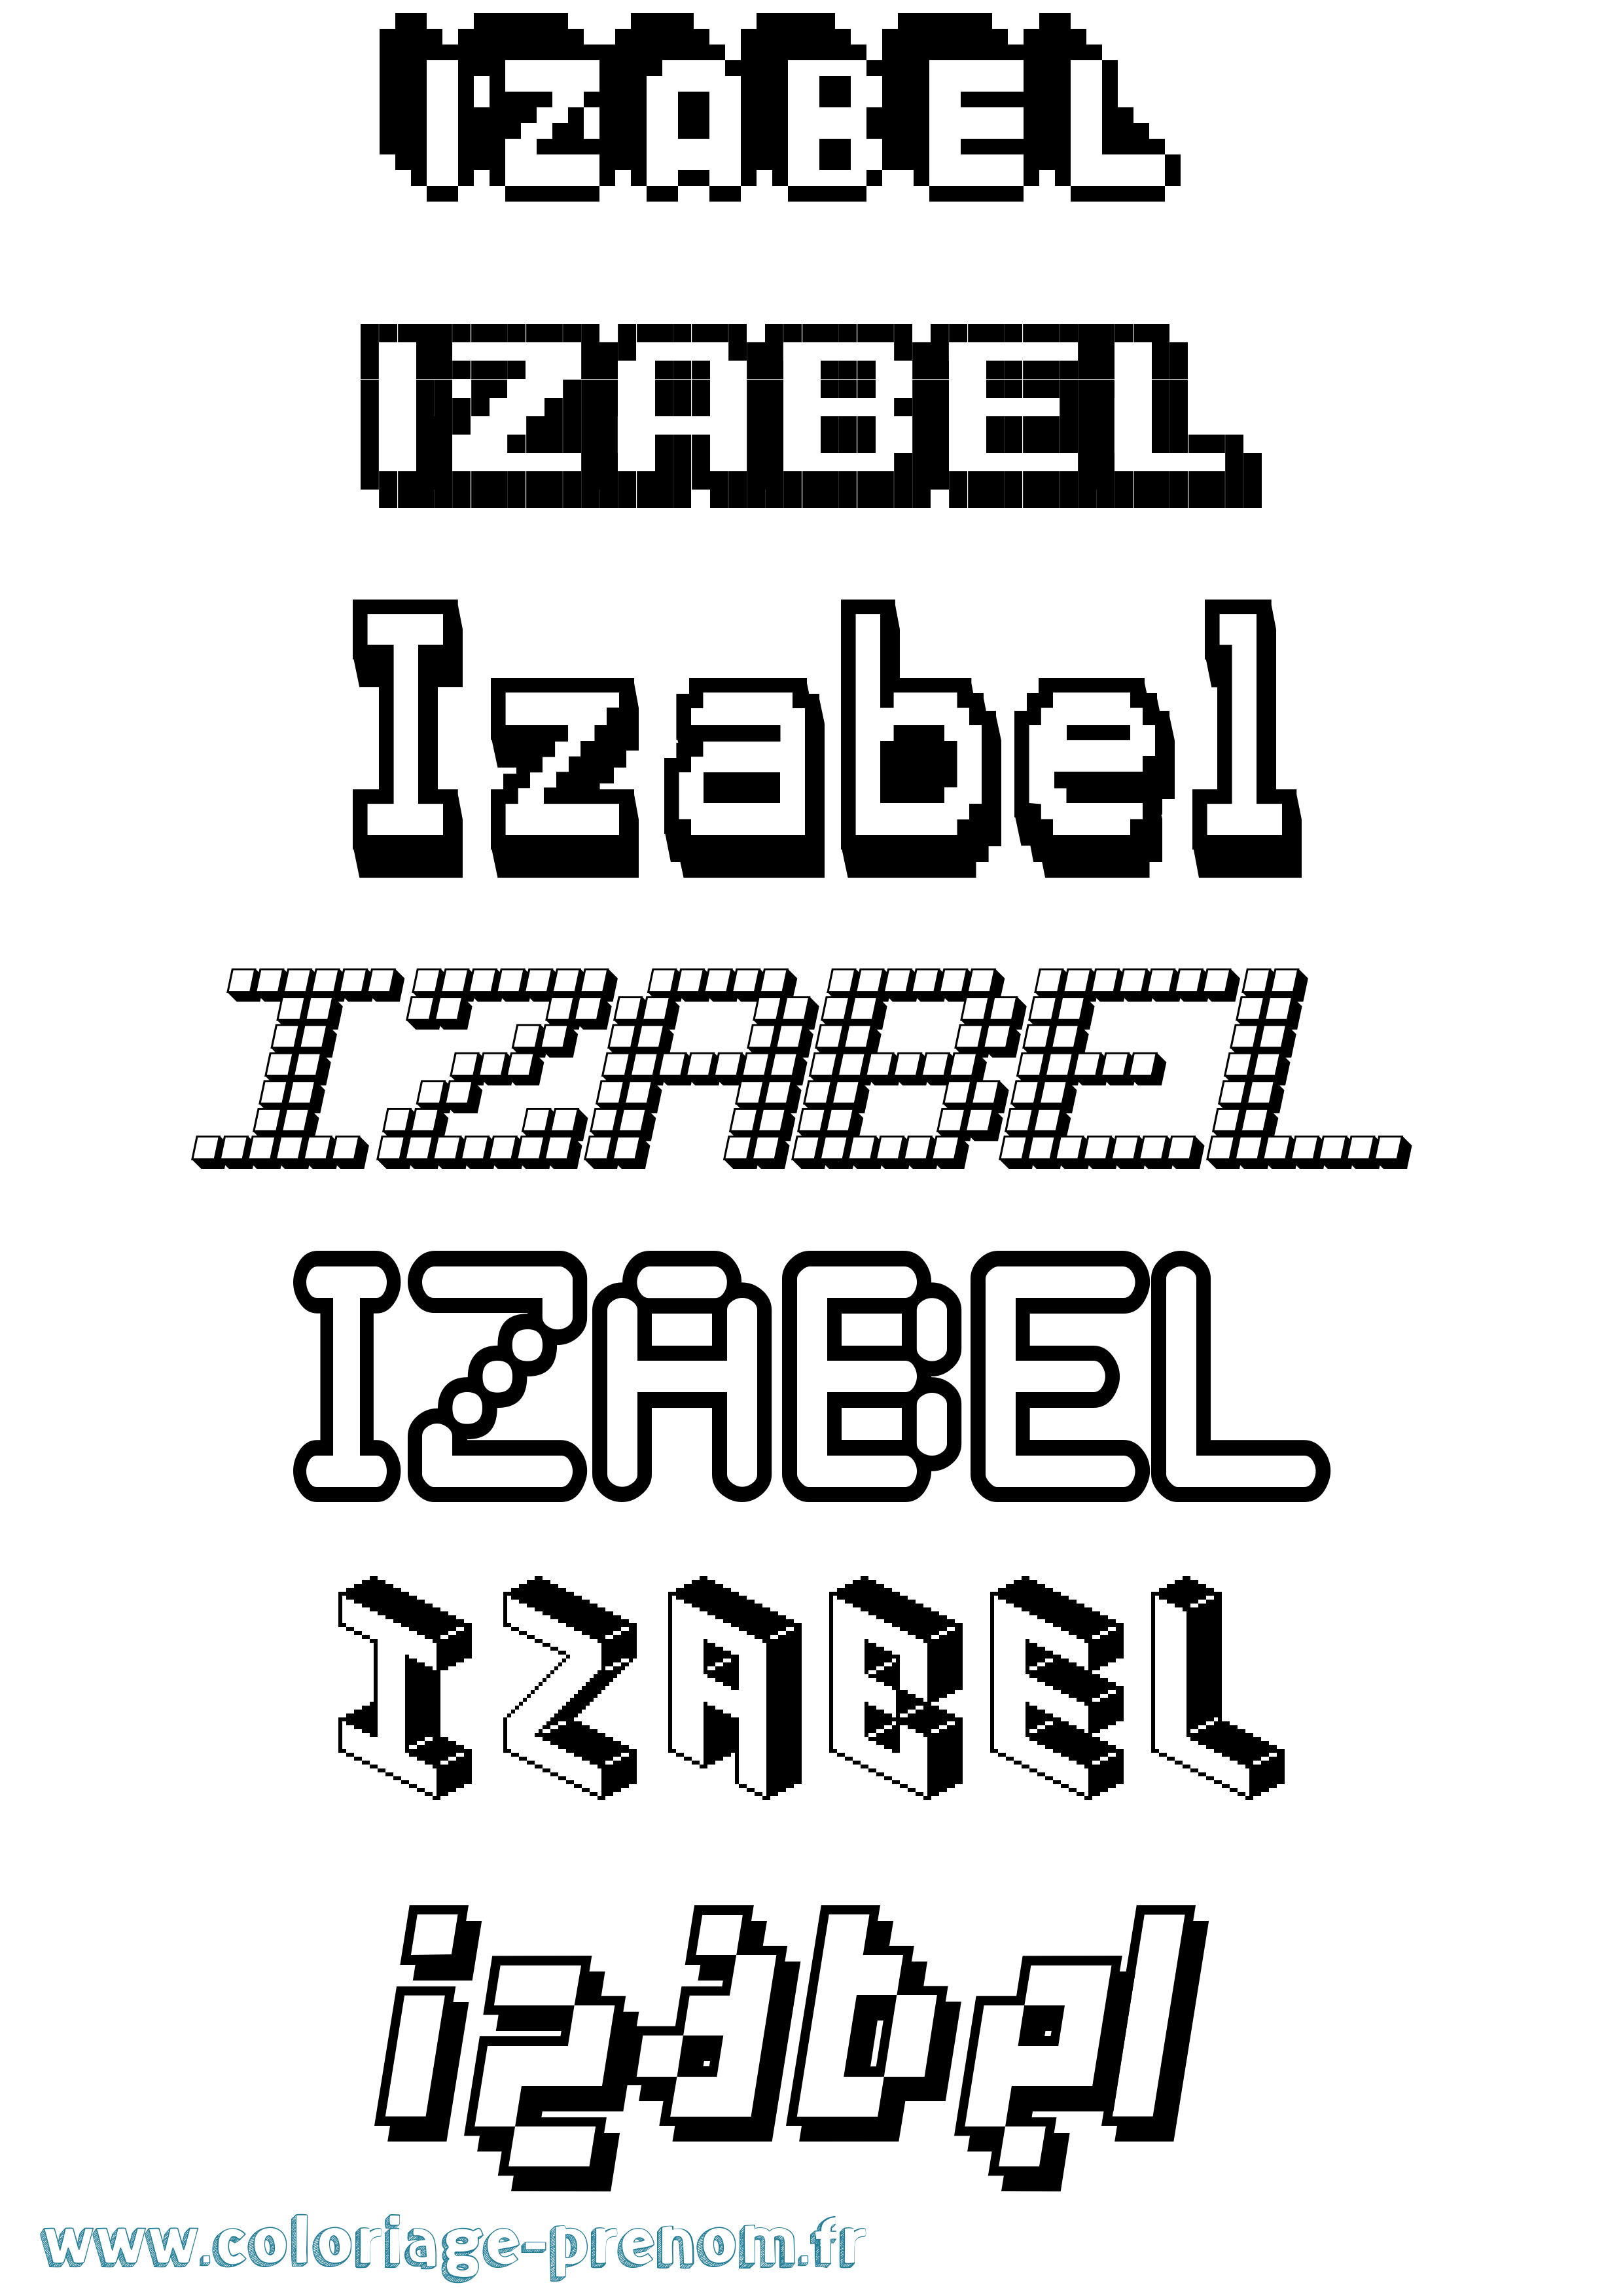 Coloriage prénom Izabel Pixel